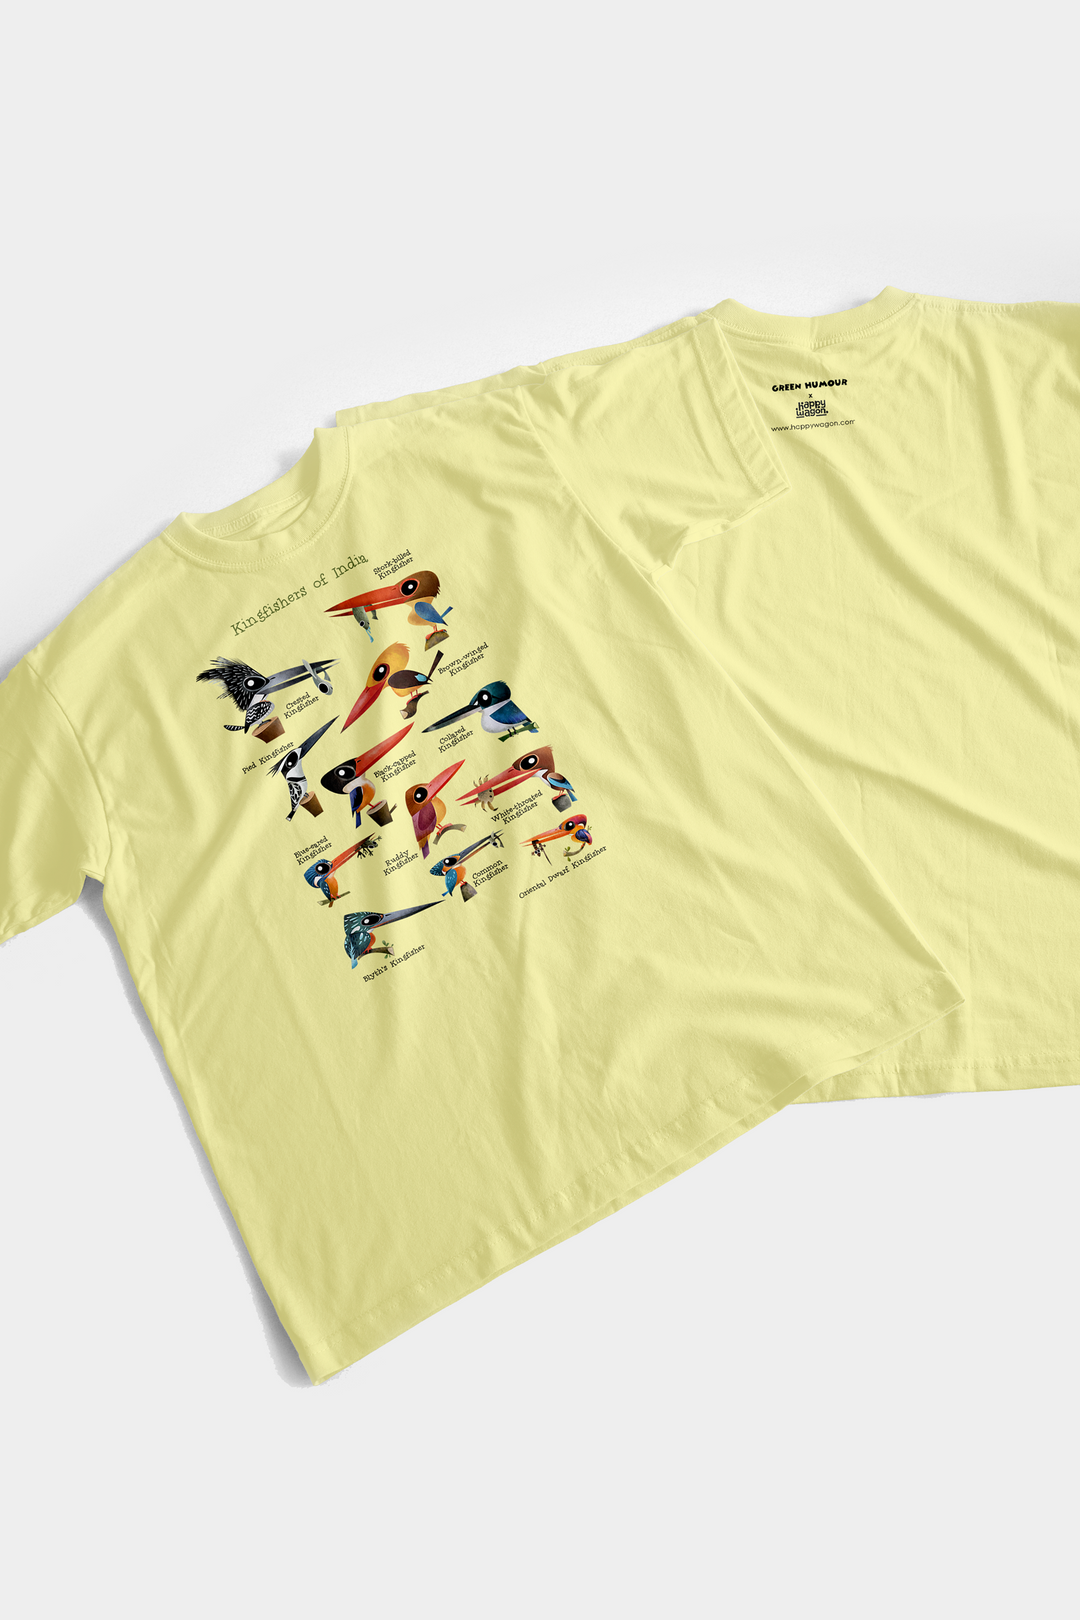 Kingfishers of India T-shirt